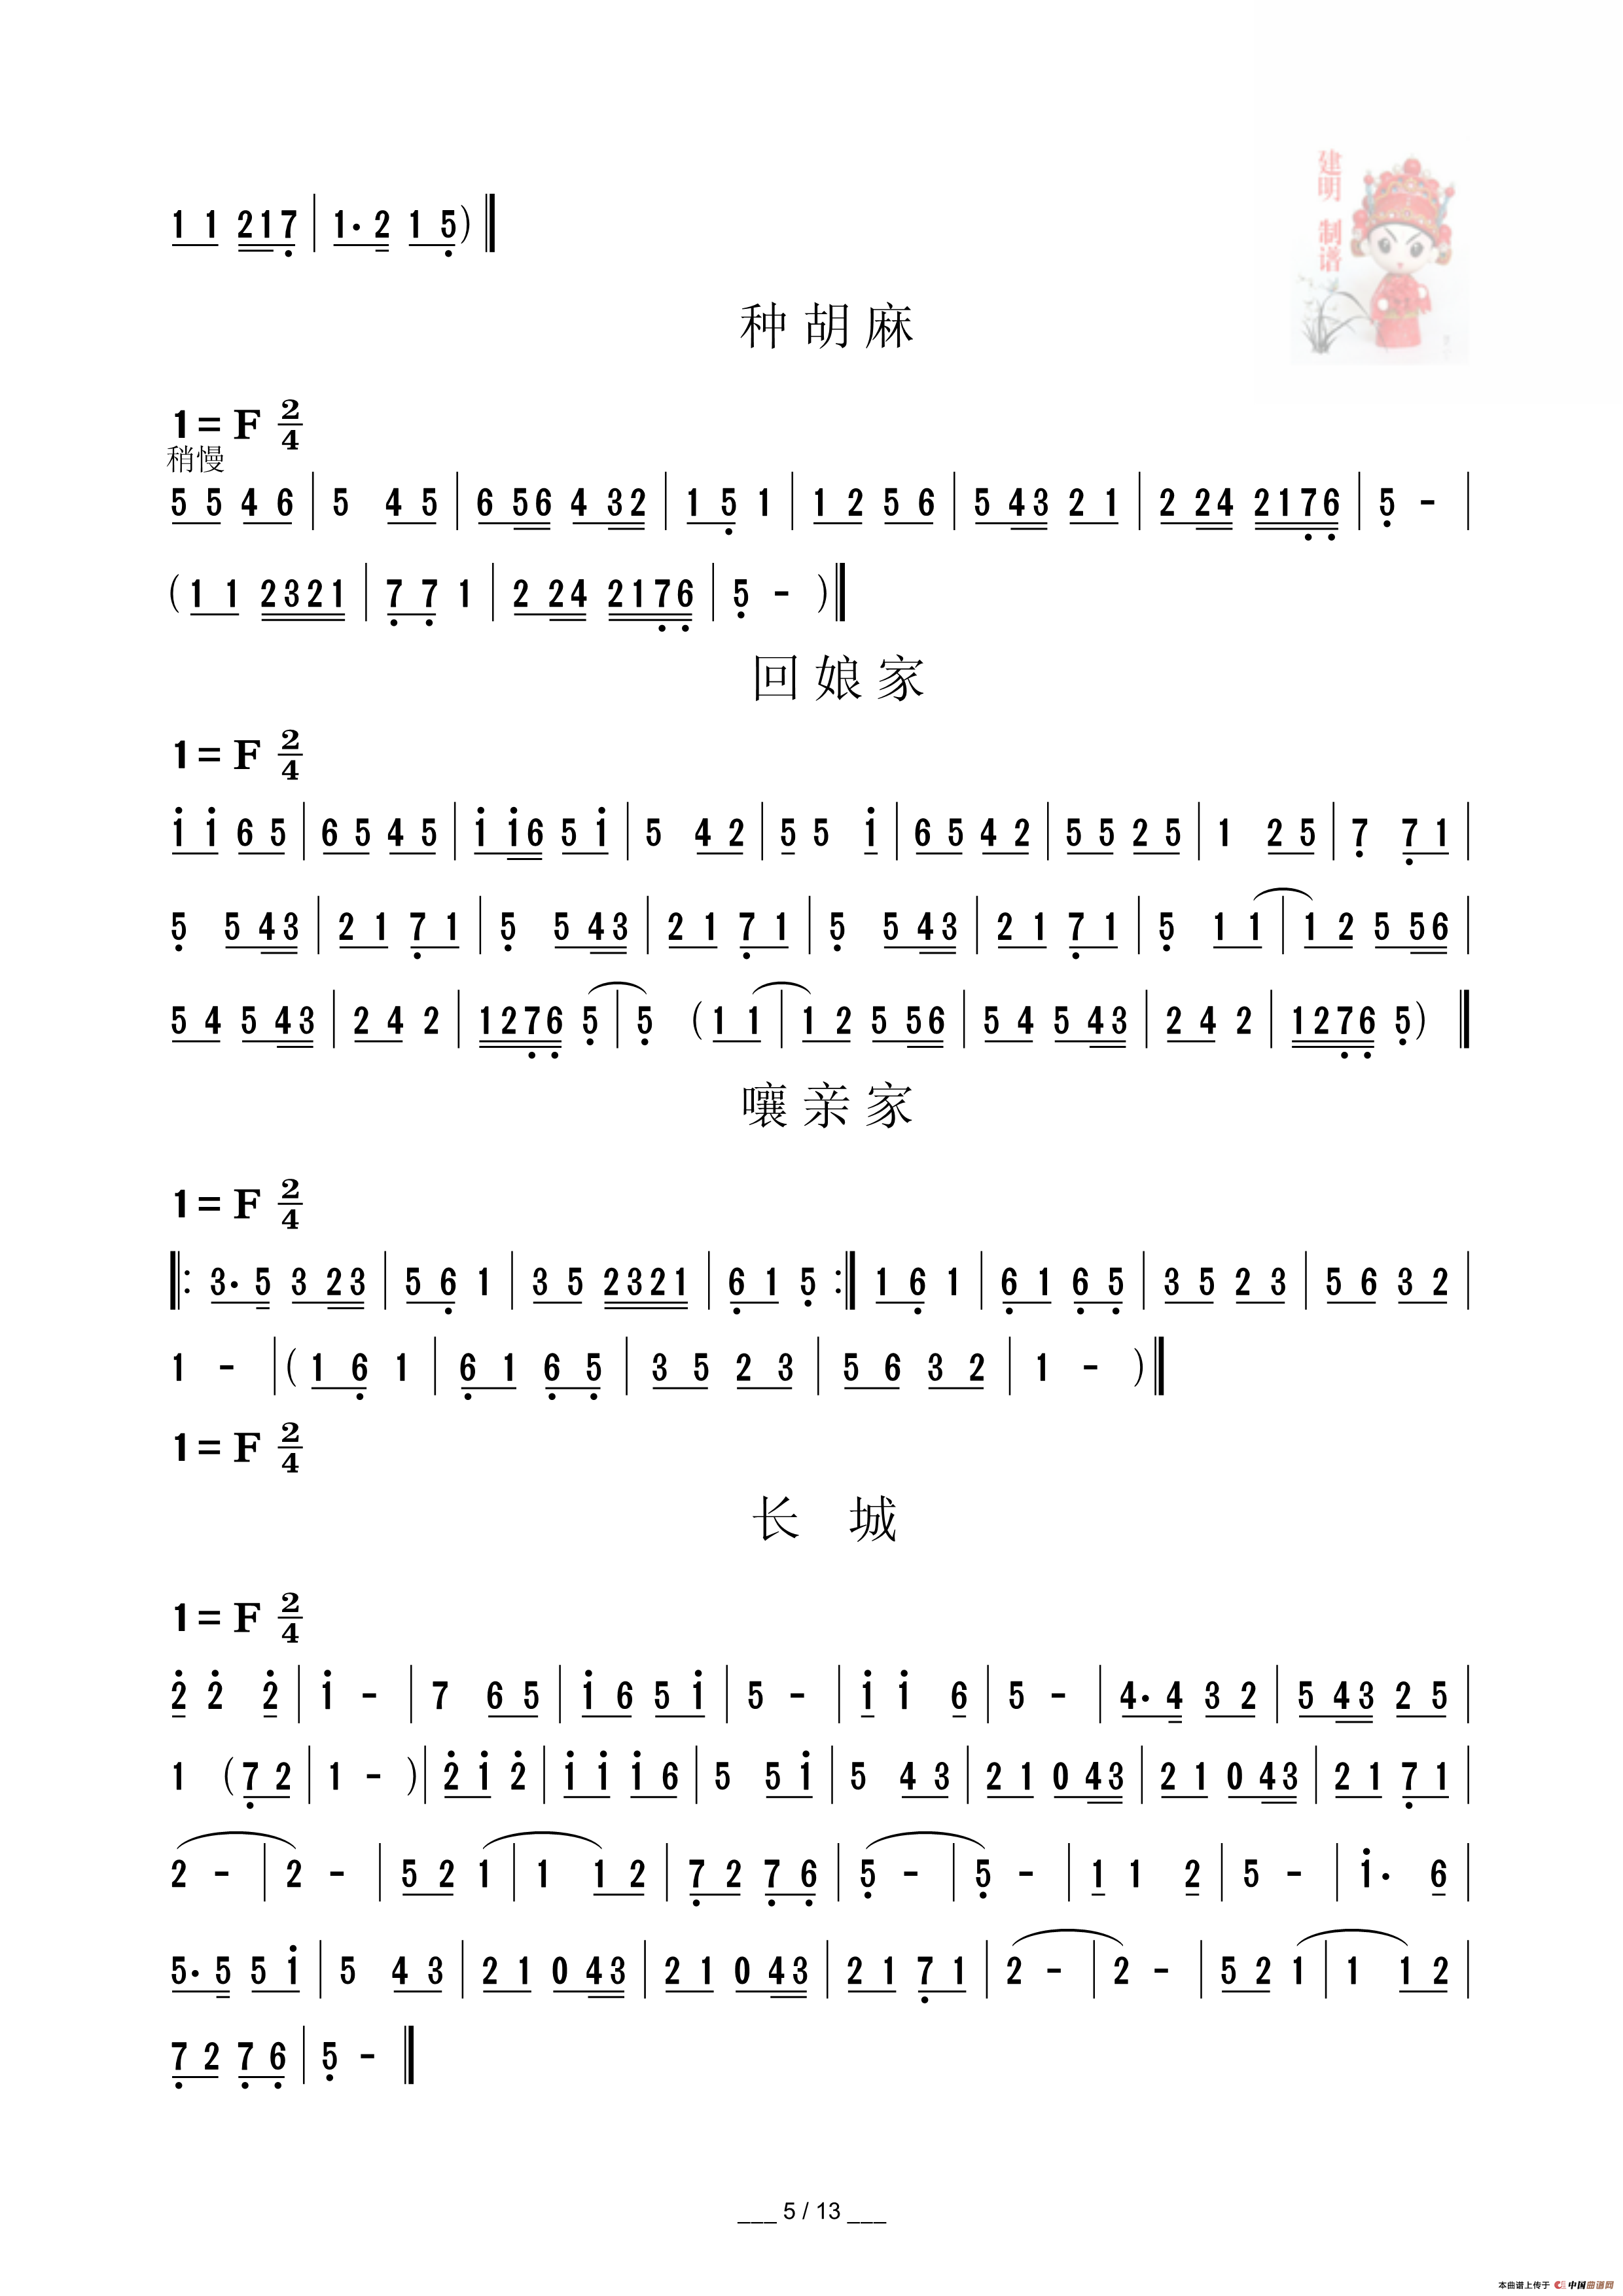 民勤小曲曲调(1)_民勤小曲曲调_Page5.png